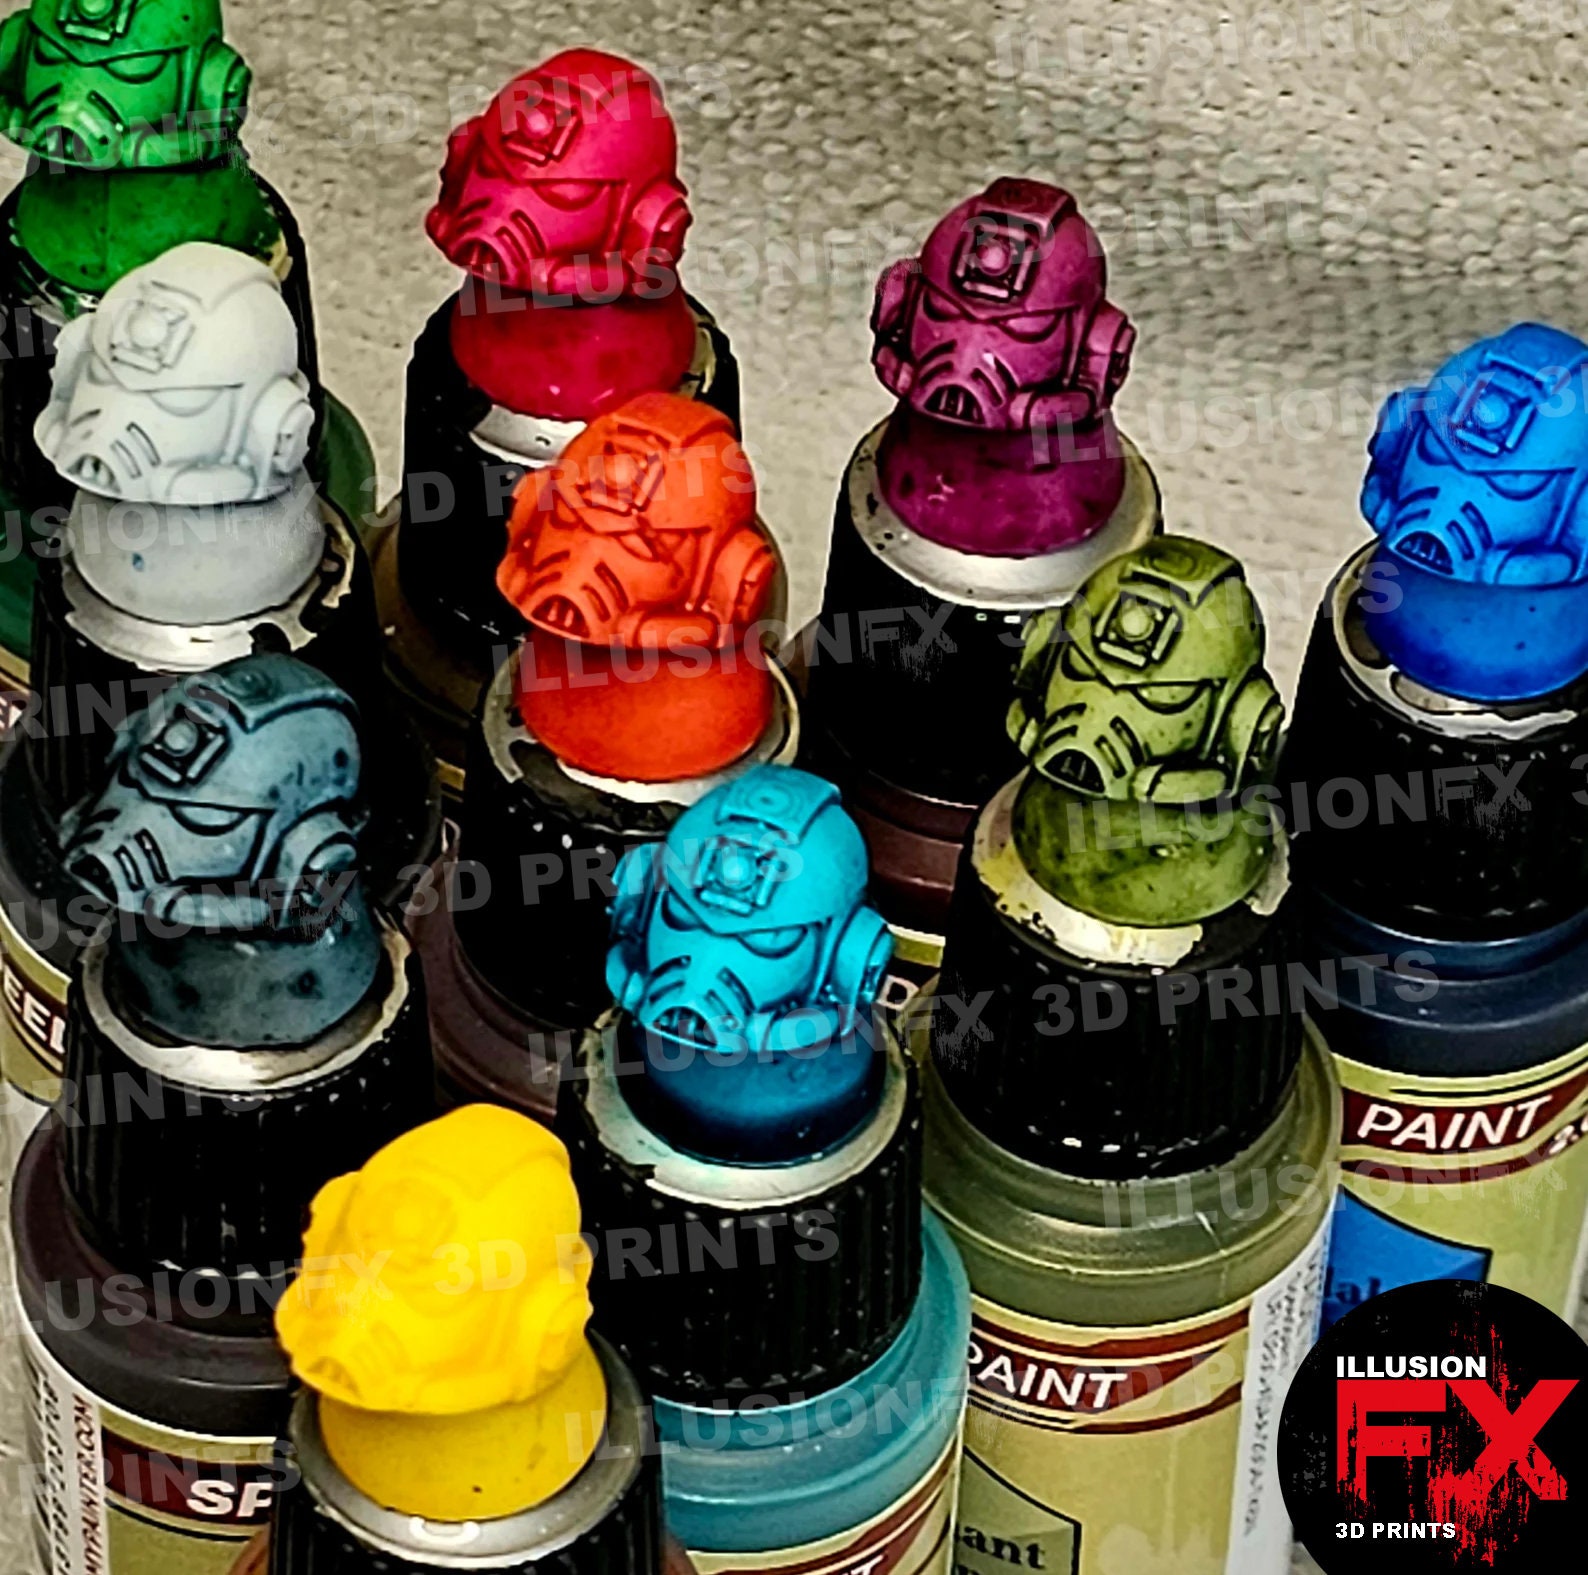 Testors Acrylic Paint Holder – Fresh Start Customs